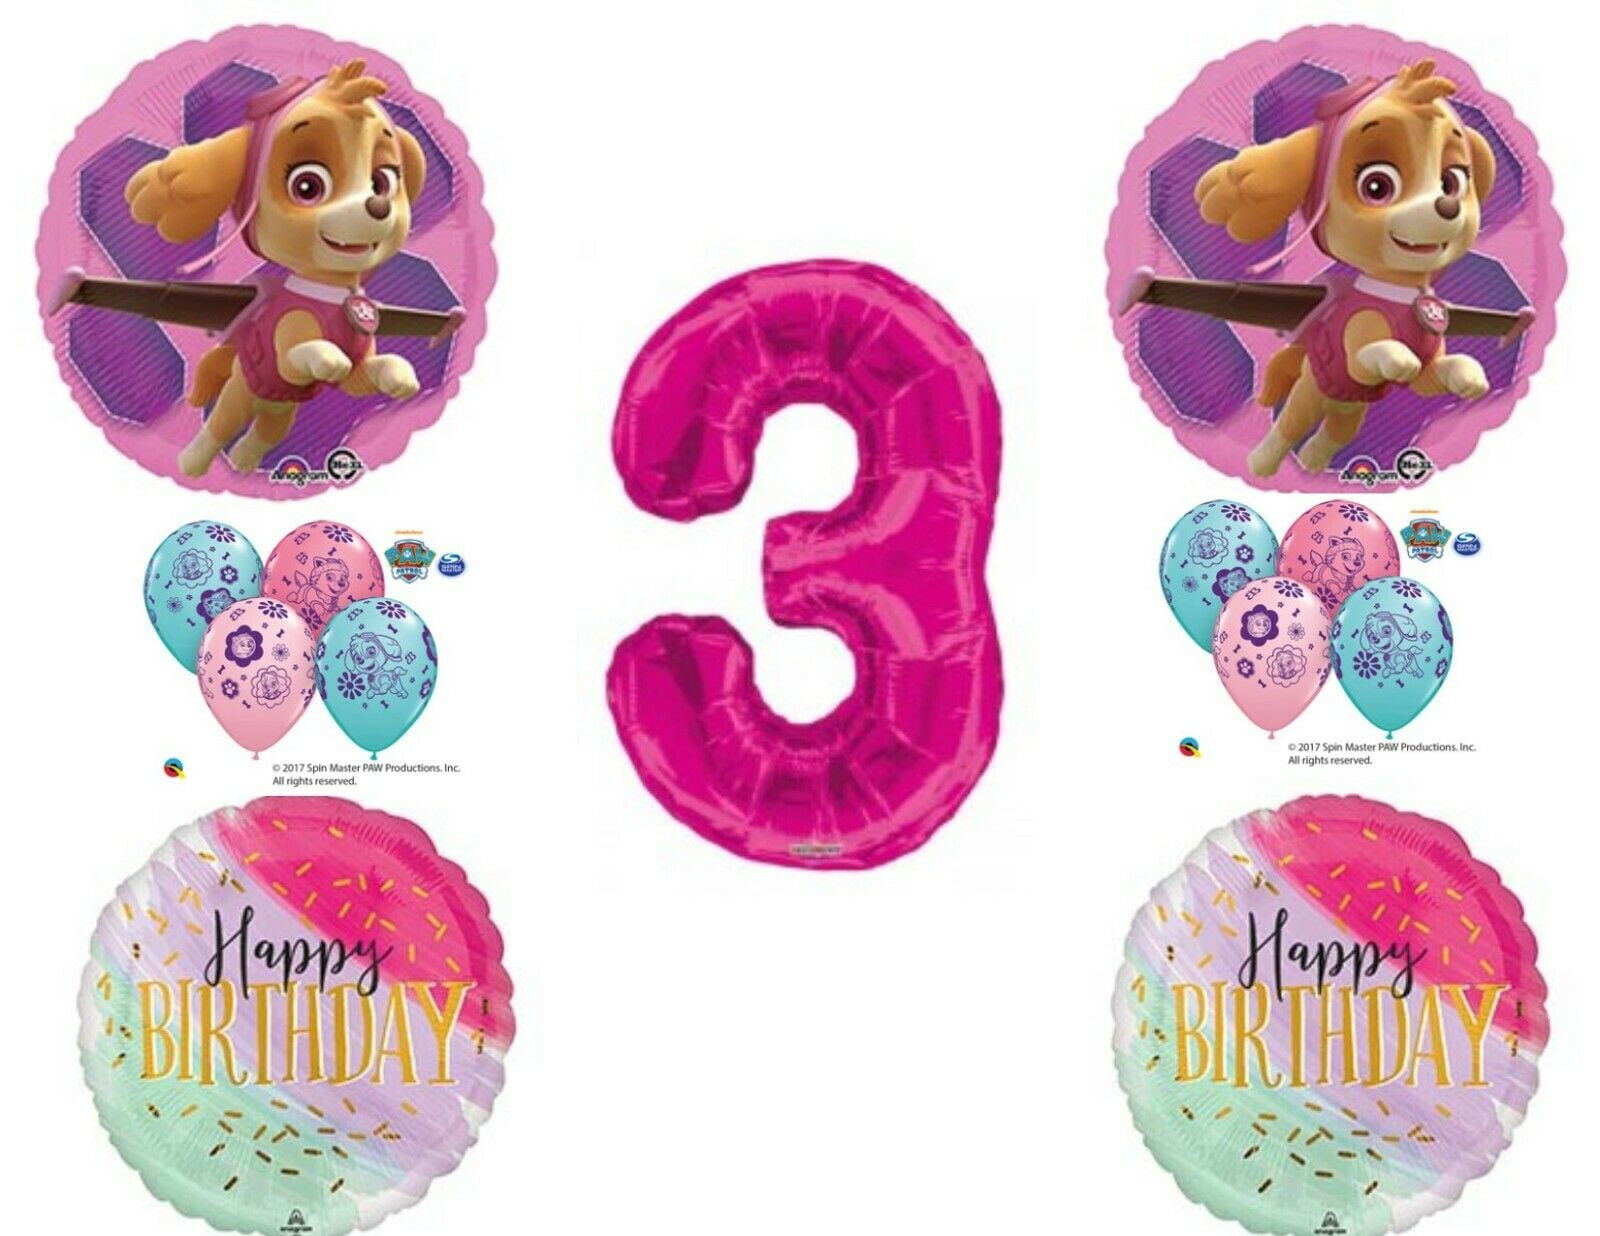 velordnet Fare Ups 3rd Birthday Skye & Everest Paw Patrol Girl Balloons Decoration Supplies  Party - Walmart.com